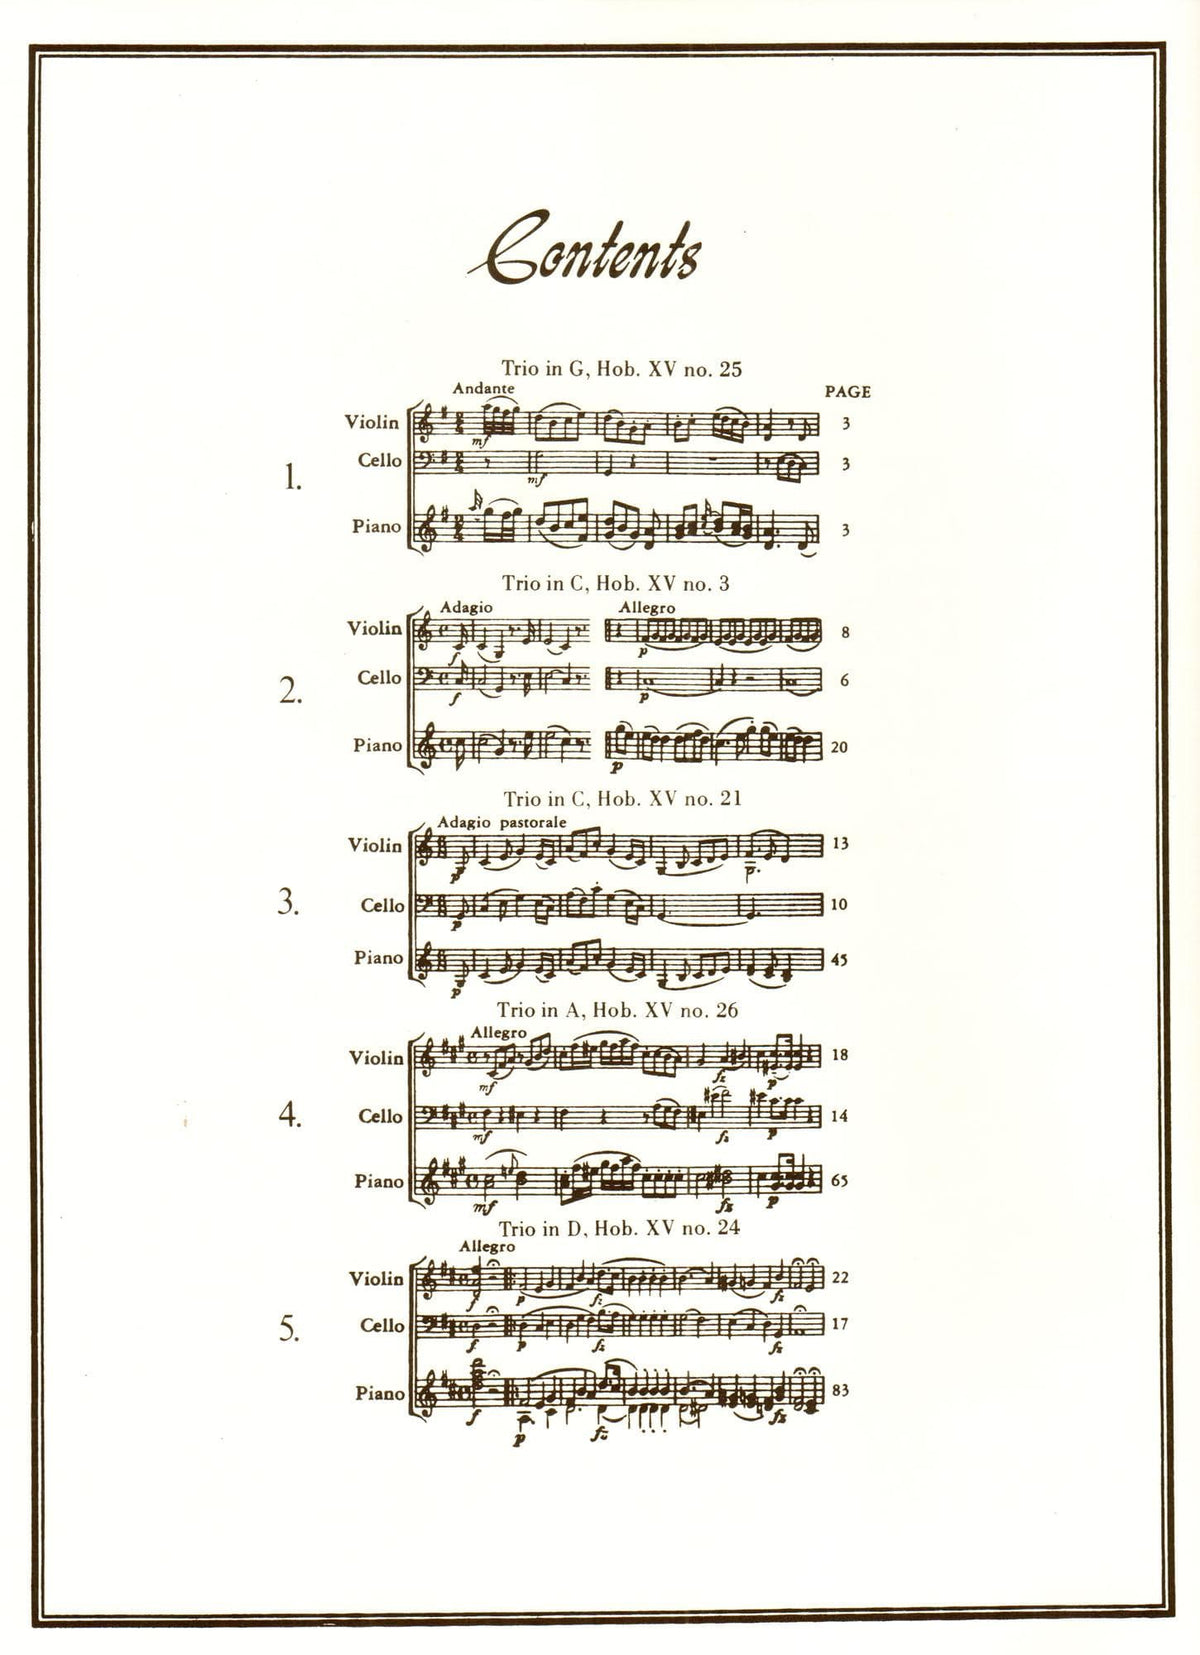 Haydn, Franz Joseph - Five Celebrated Piano Trios - Violin, Cello, and Piano - edited by Hermann - International Edition